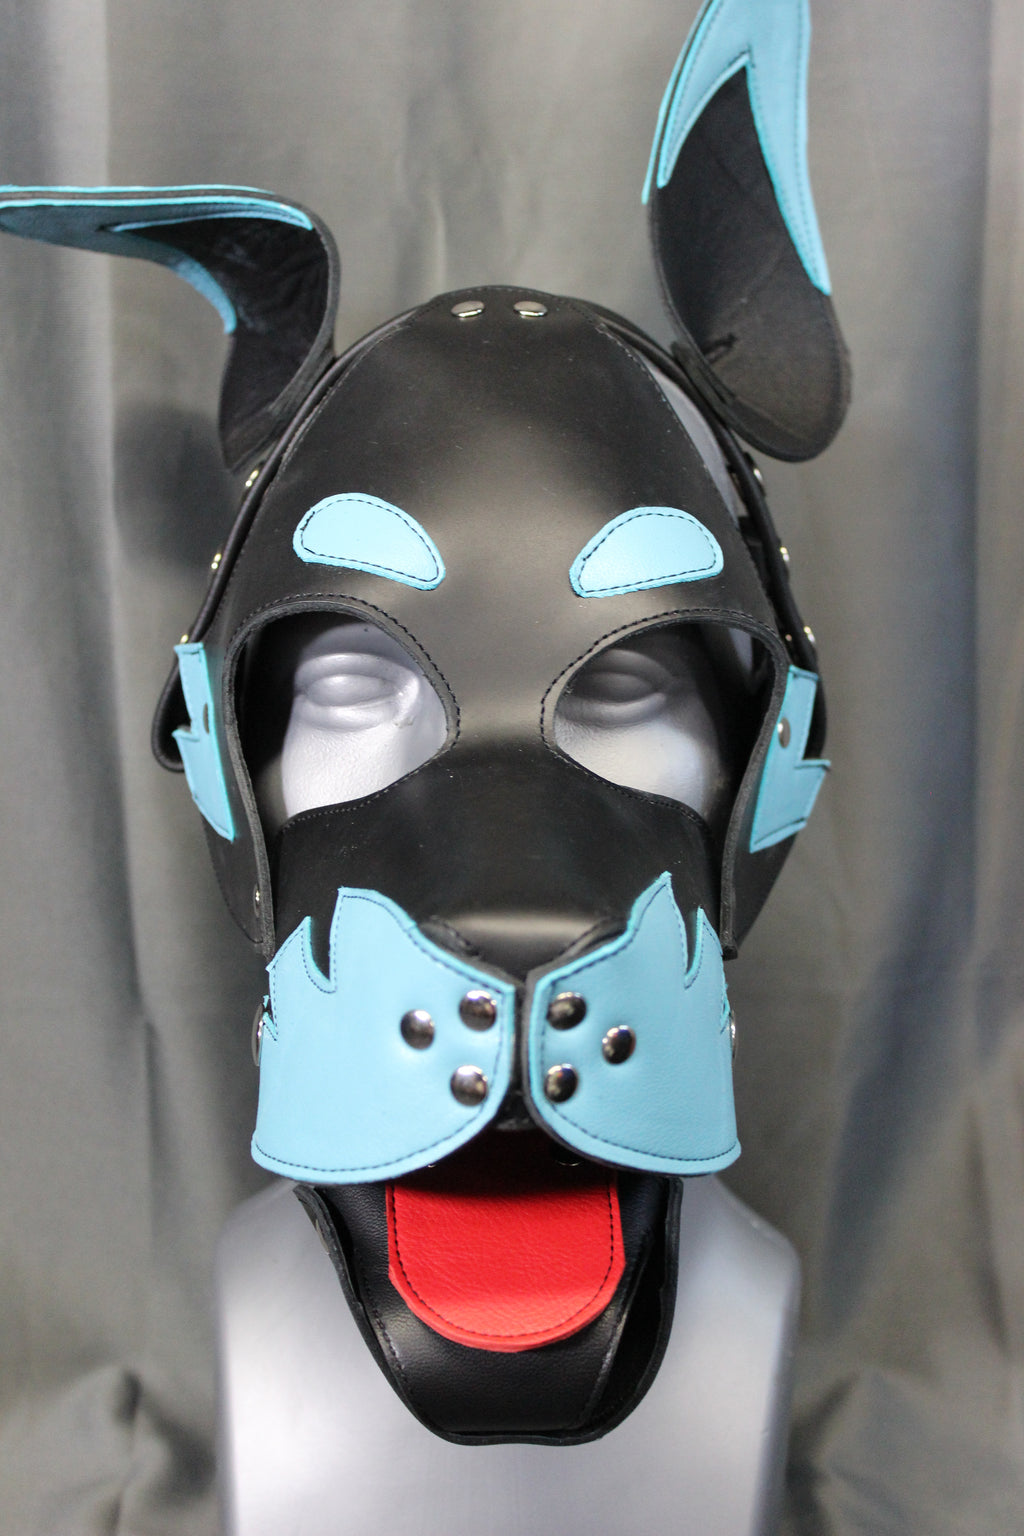 Nightwing' Inspired Blue Terrier Hood